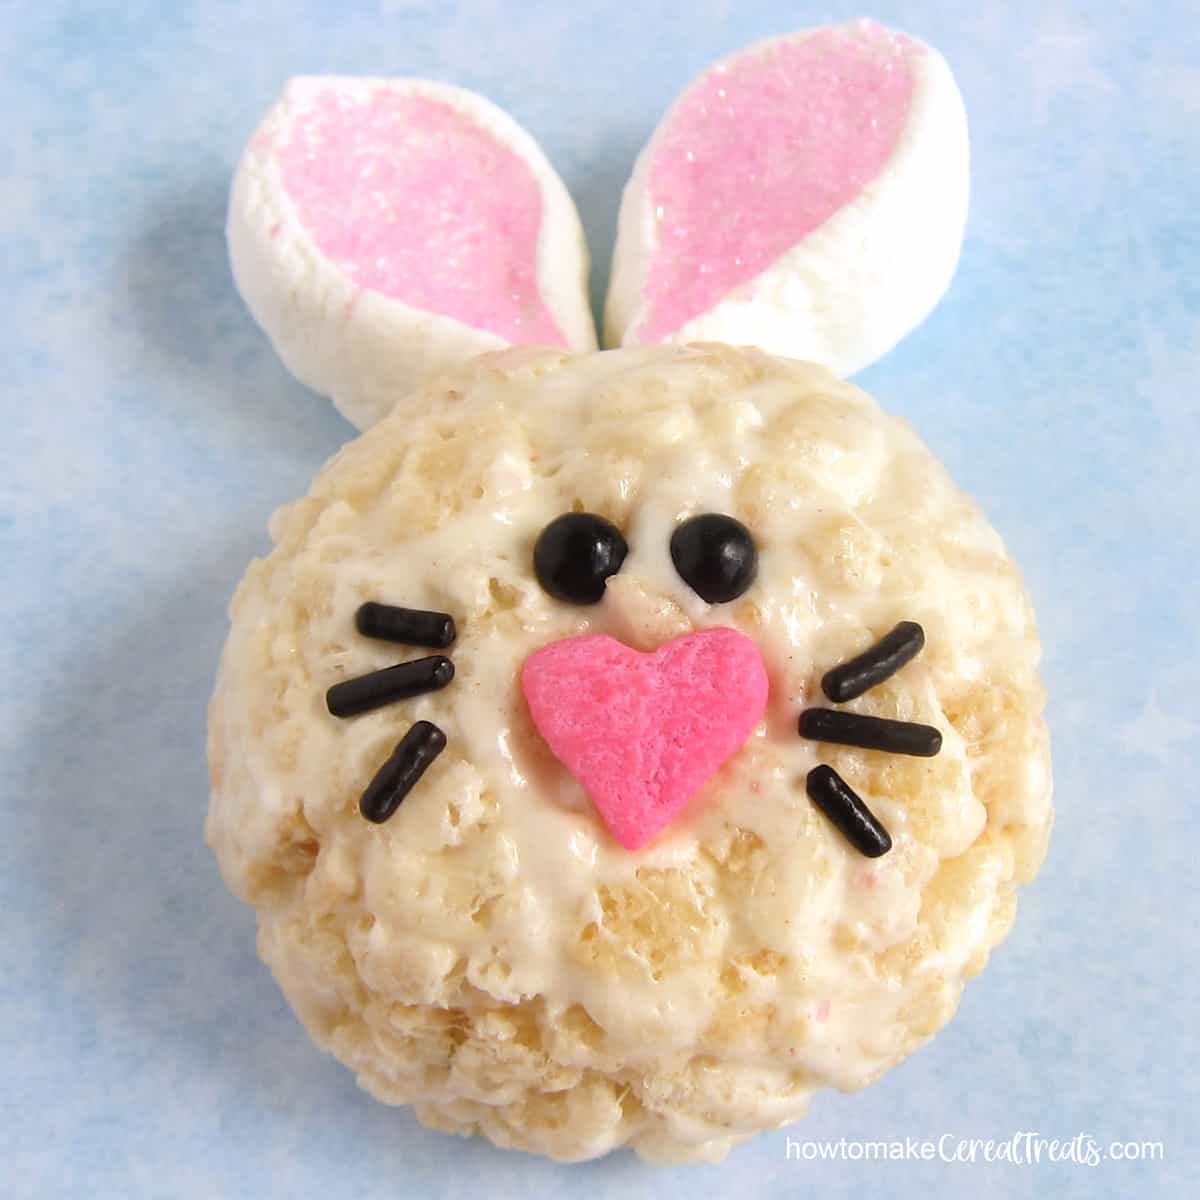 Easter bunny rice krispie treat recipe image.